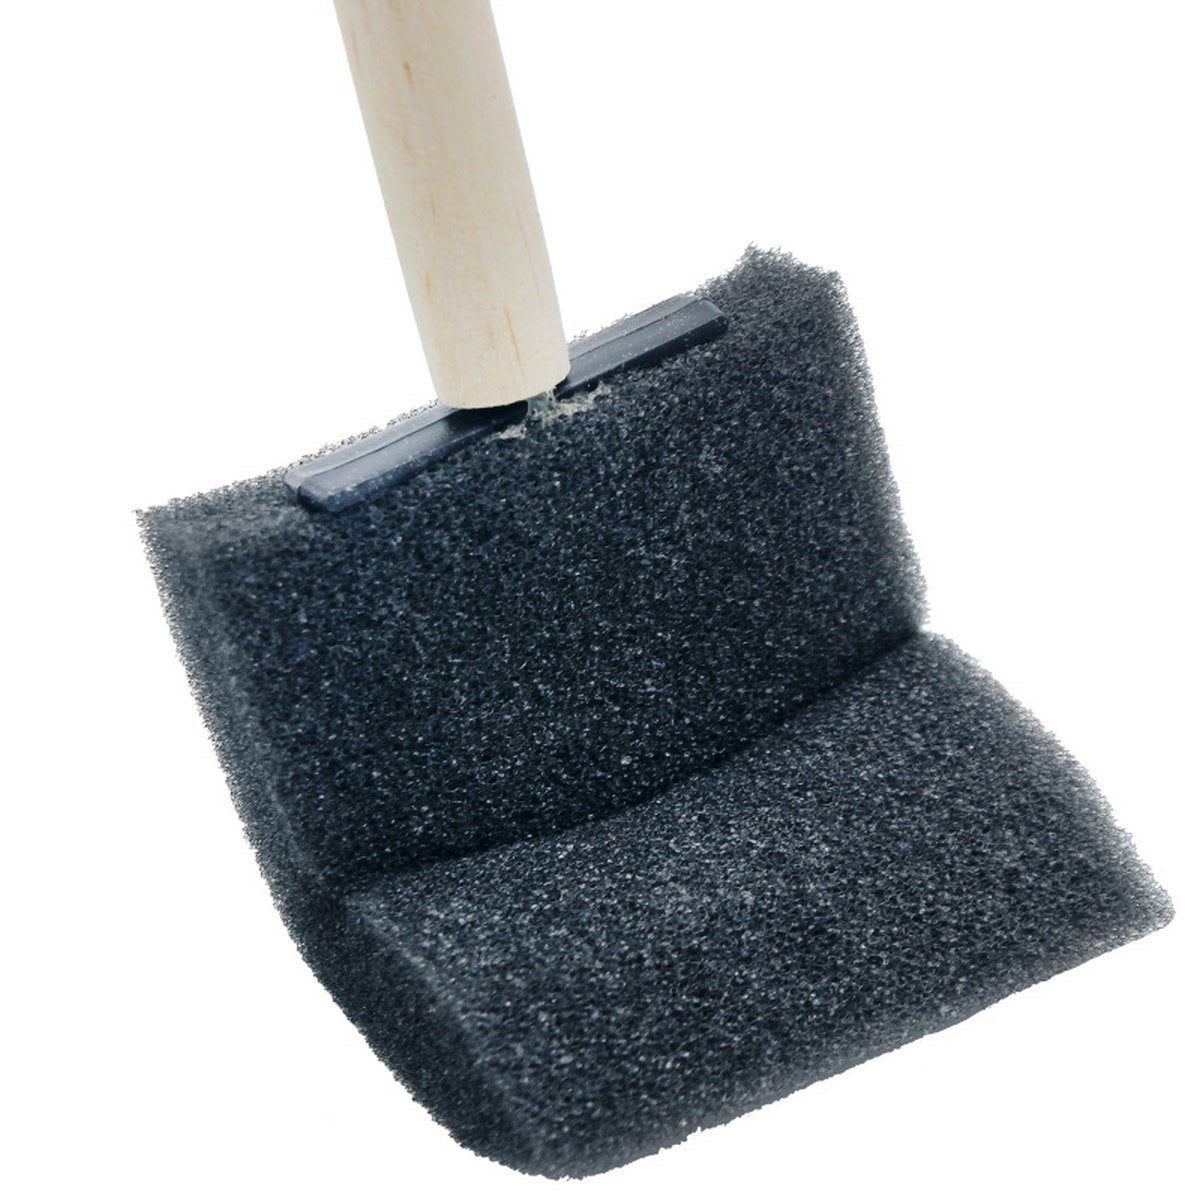 jags-mumbai Brush Flat sponge brush pack of 3 for shading